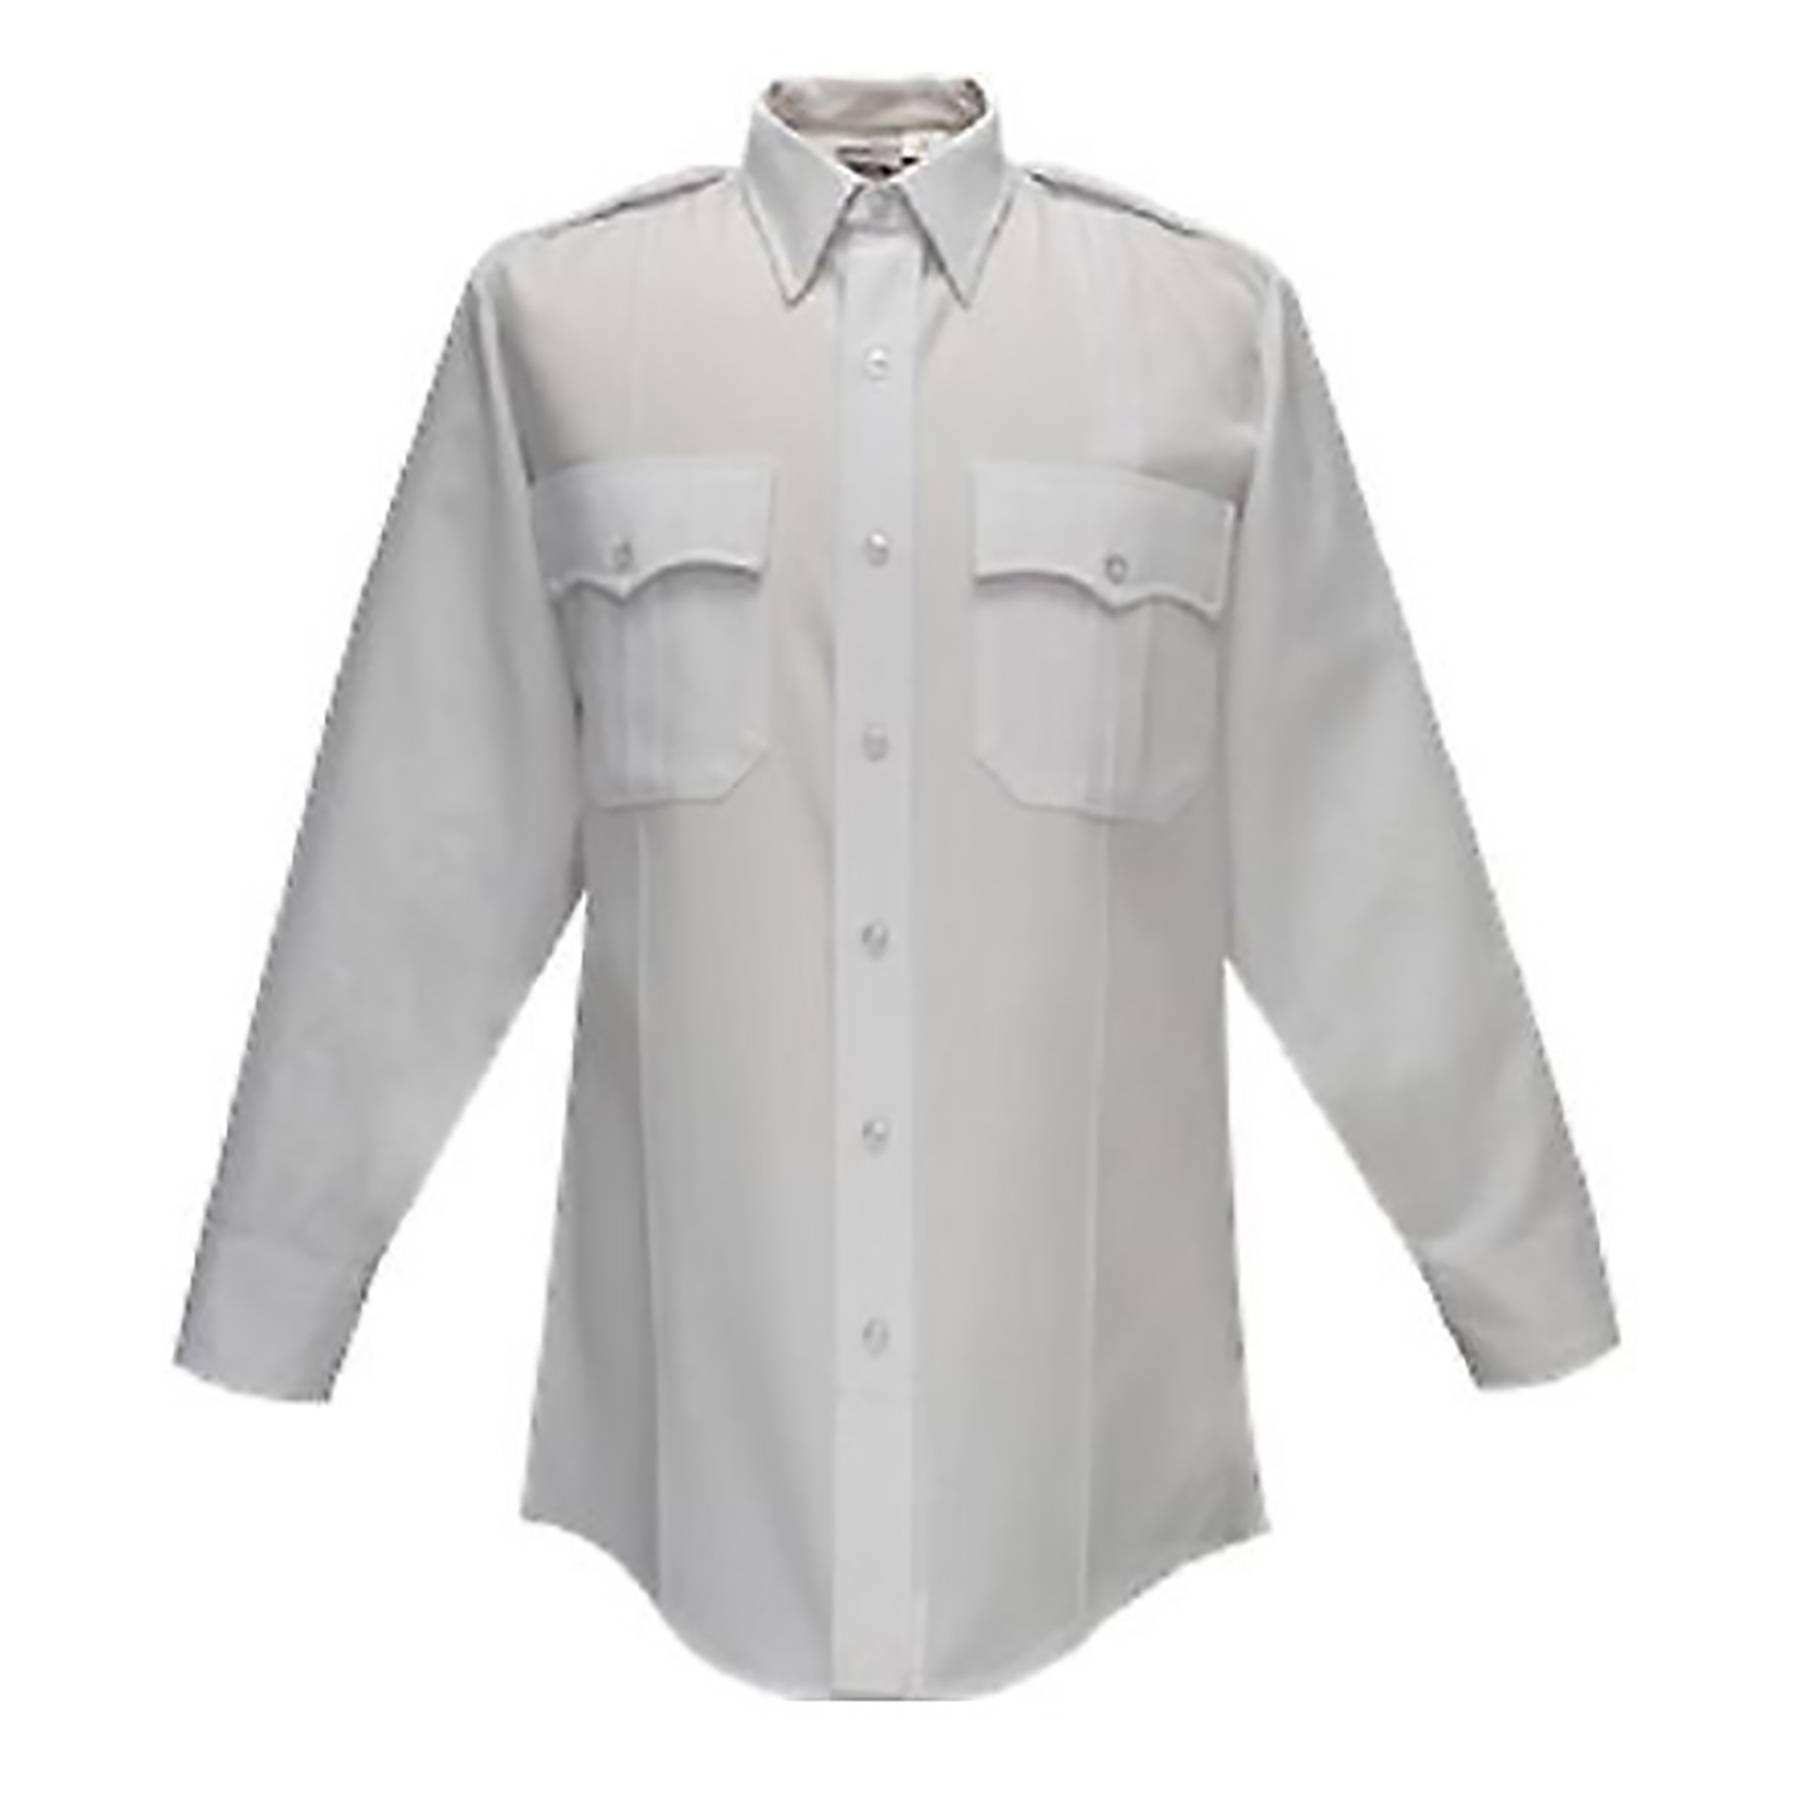 Flying Cross Men's Deluxe Tropical Weave Long Sleeve Shirt w